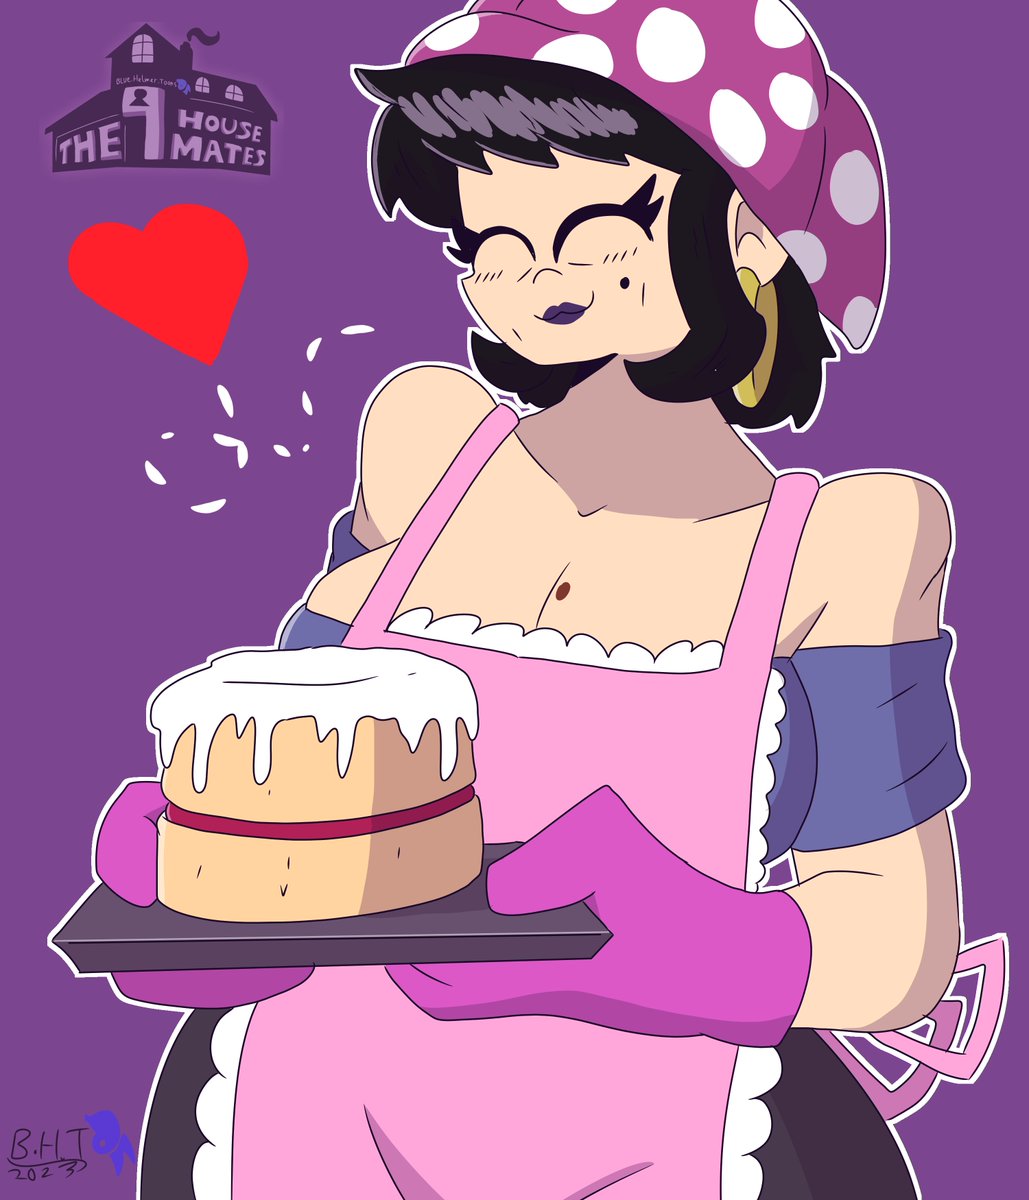 Rachel made some cake for you cause she likes you <3

#housewife #cake #cakebaker #bakingcakes #baking #the9housemates #bluehelmetoc #oc #ocs #myoc #myocs #originalcharacter #myoriginalcharacter #characterdesign #art #myart #digitalart #digitaldrawing #drawing